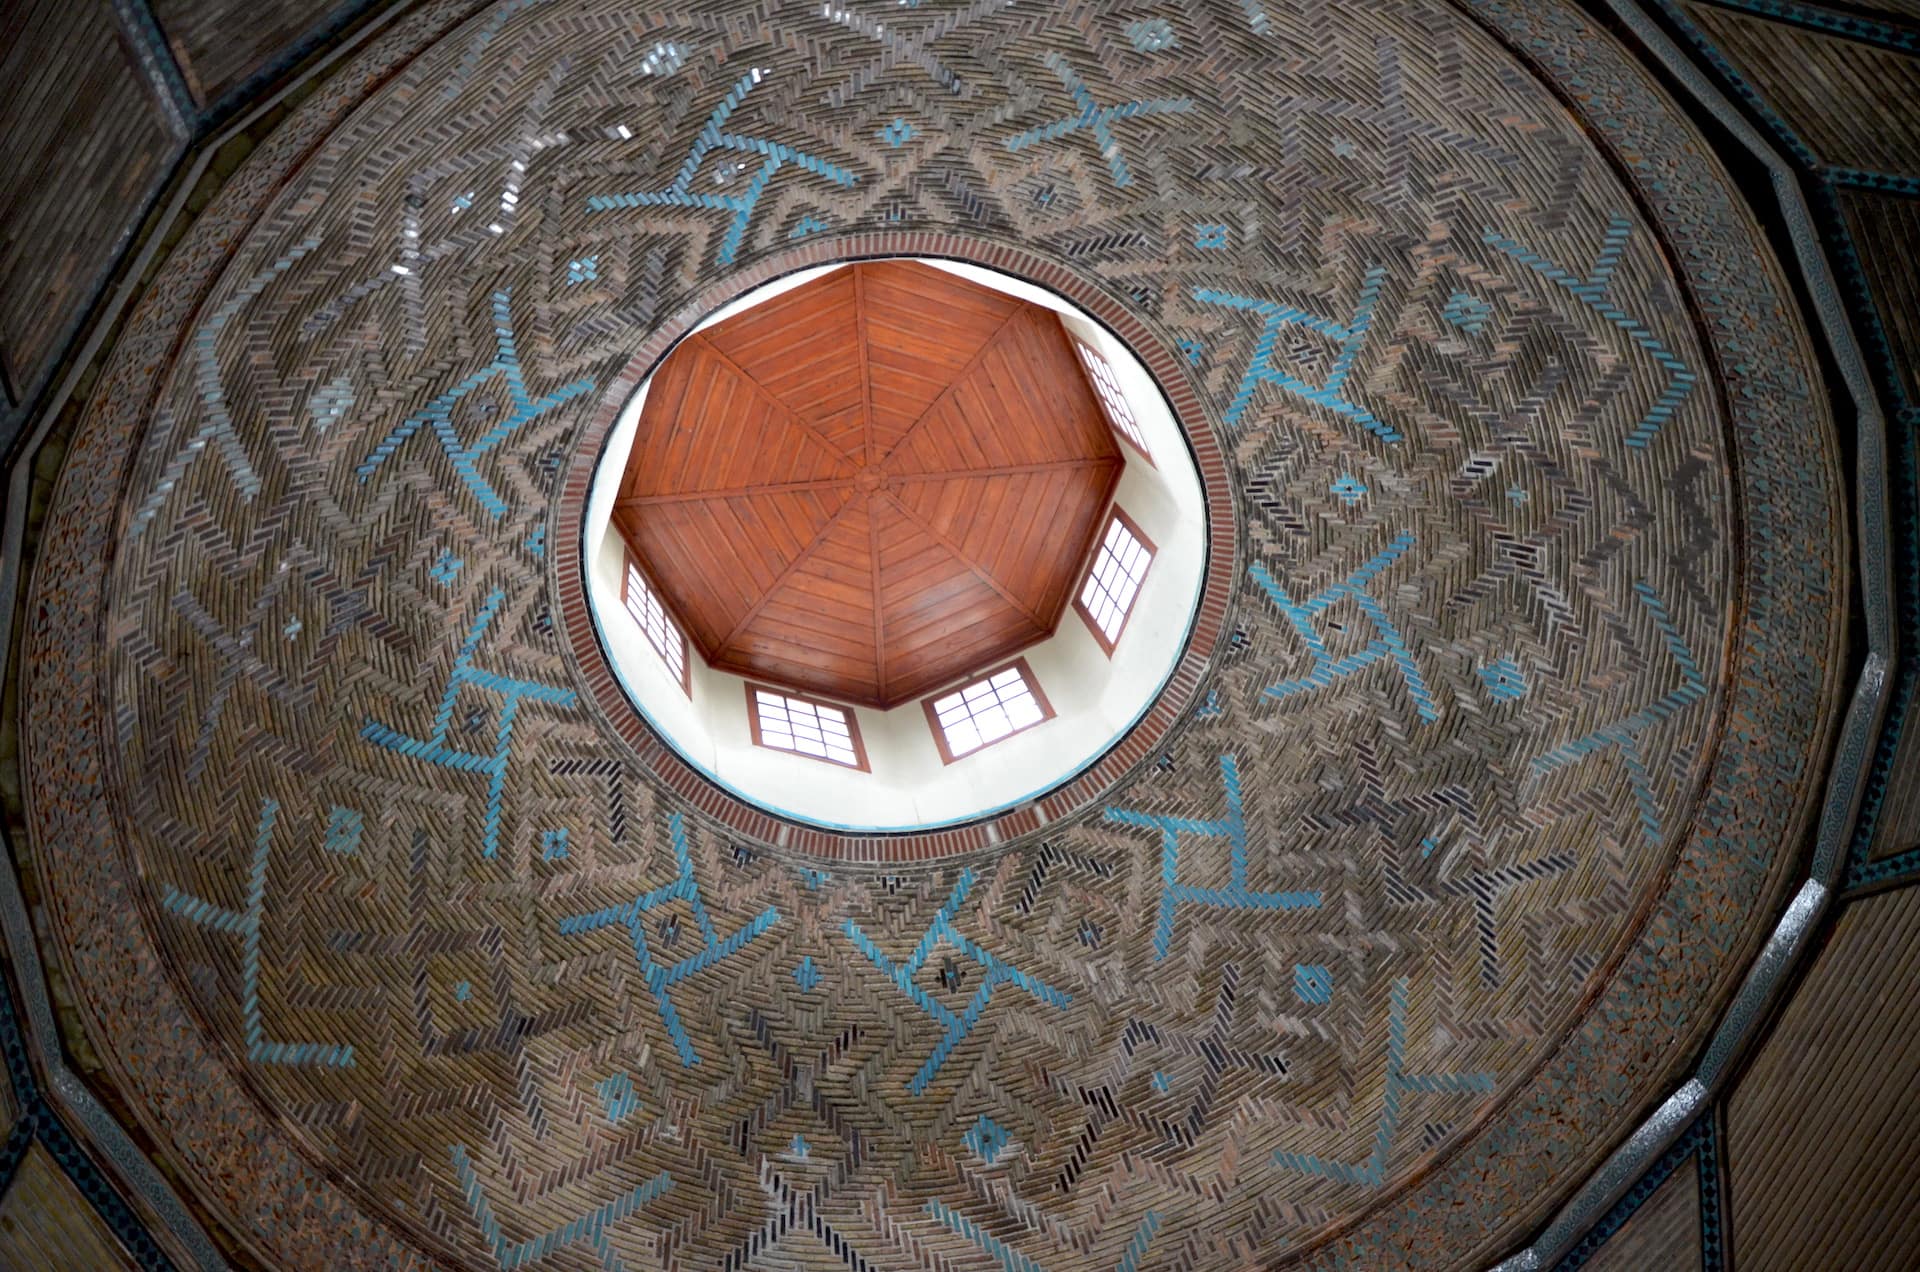 Dome of the Ince Minareli Madrasa in Konya, Turkey